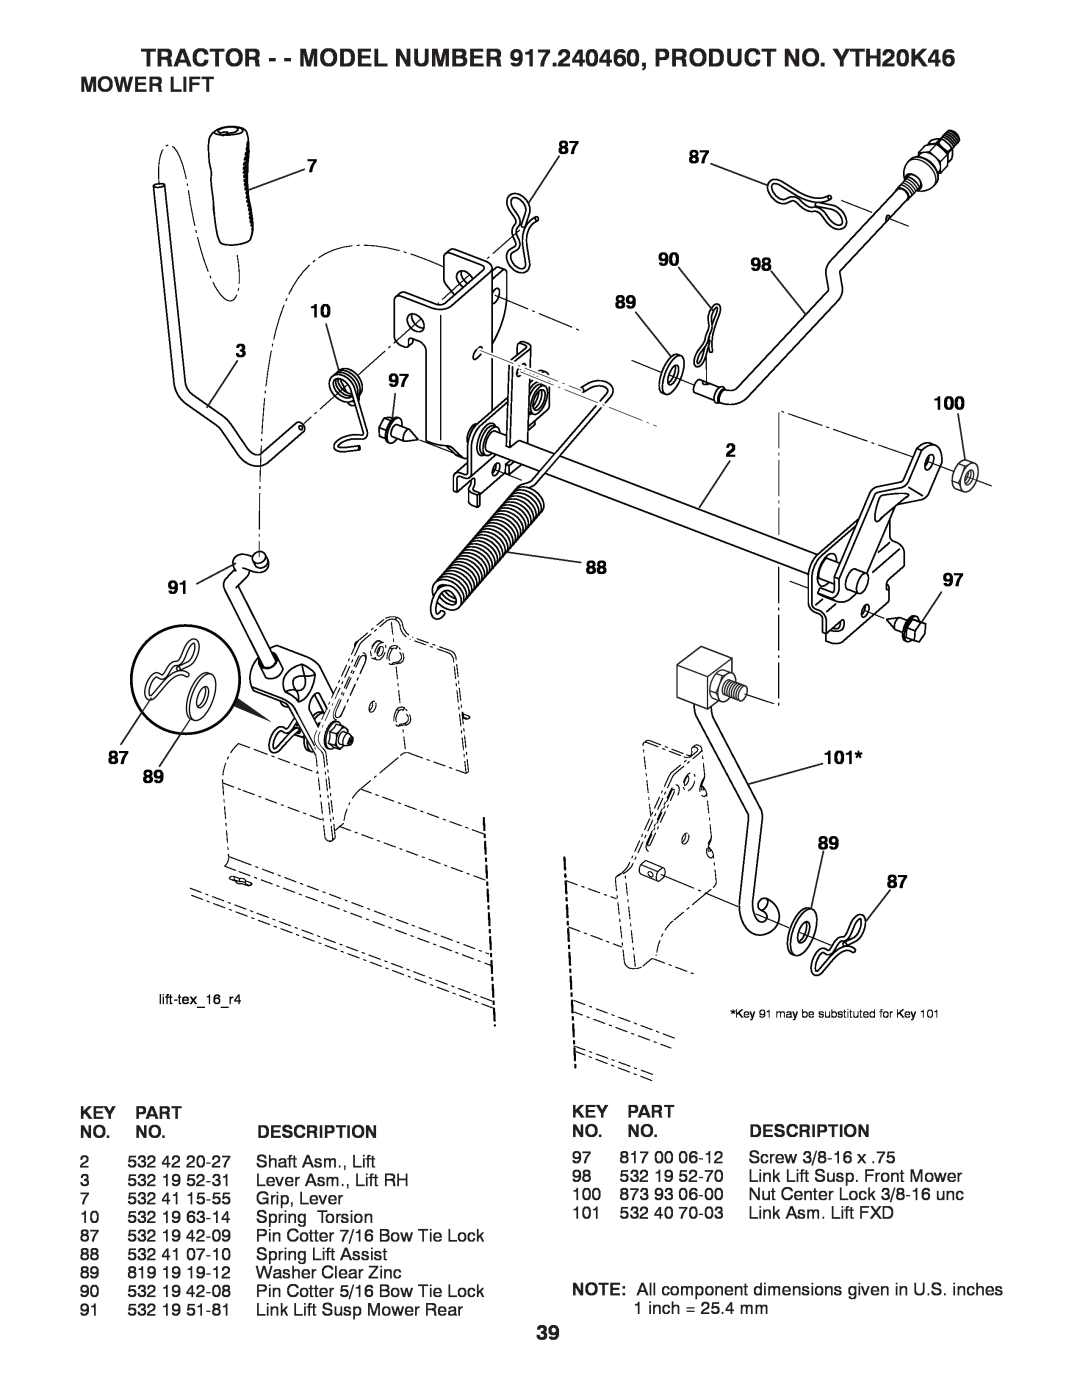 Husqvarna owner manual Mower Lift, TRACTOR - - MODEL NUMBER 917.240460, PRODUCT NO. YTH20K46, 8787, lift-tex16r4 